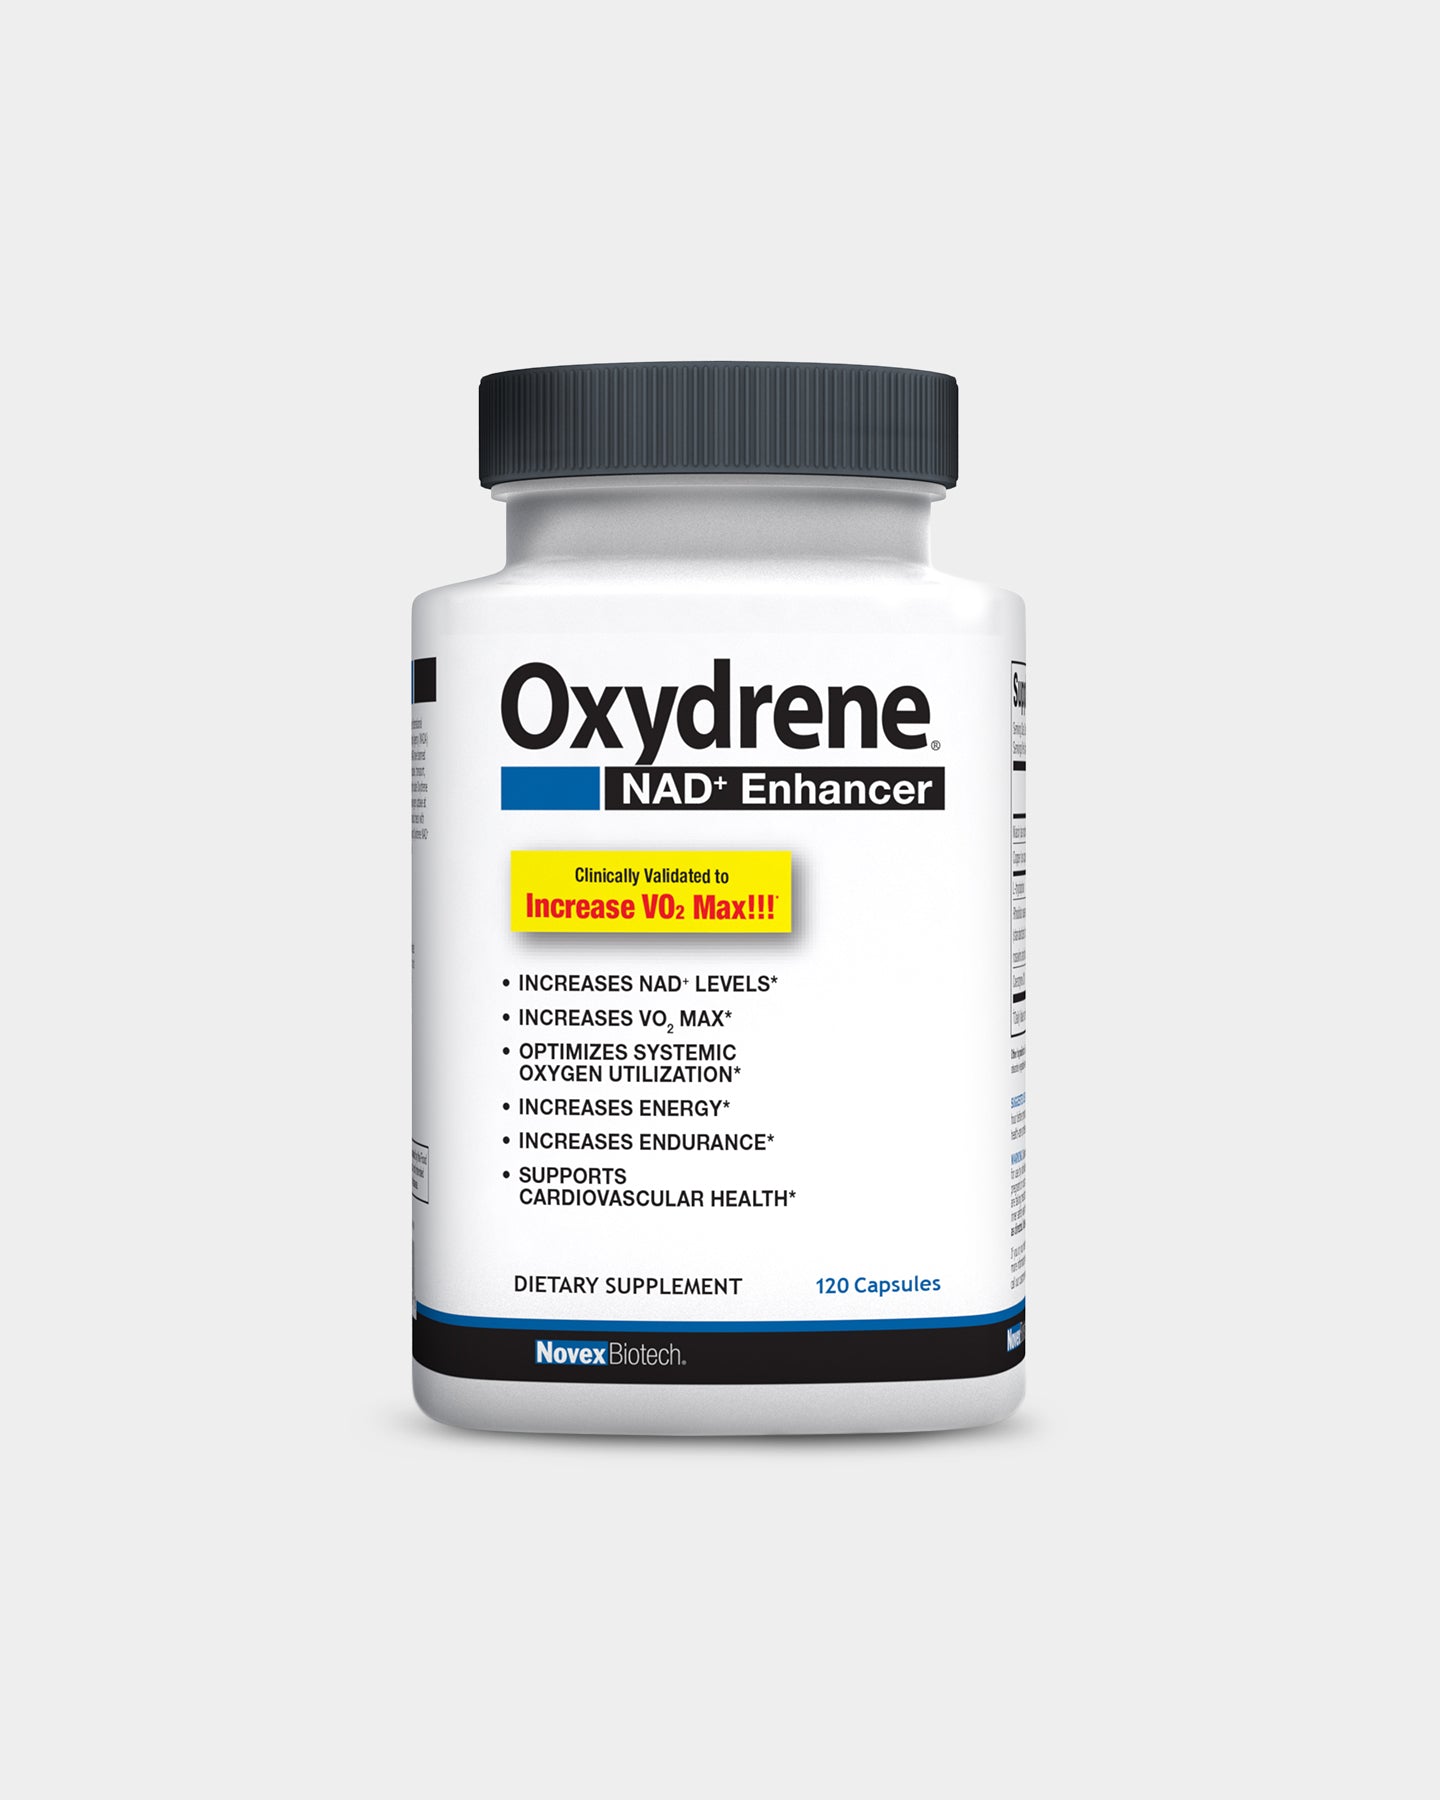 Novex Biotech OxyDrene NAD+